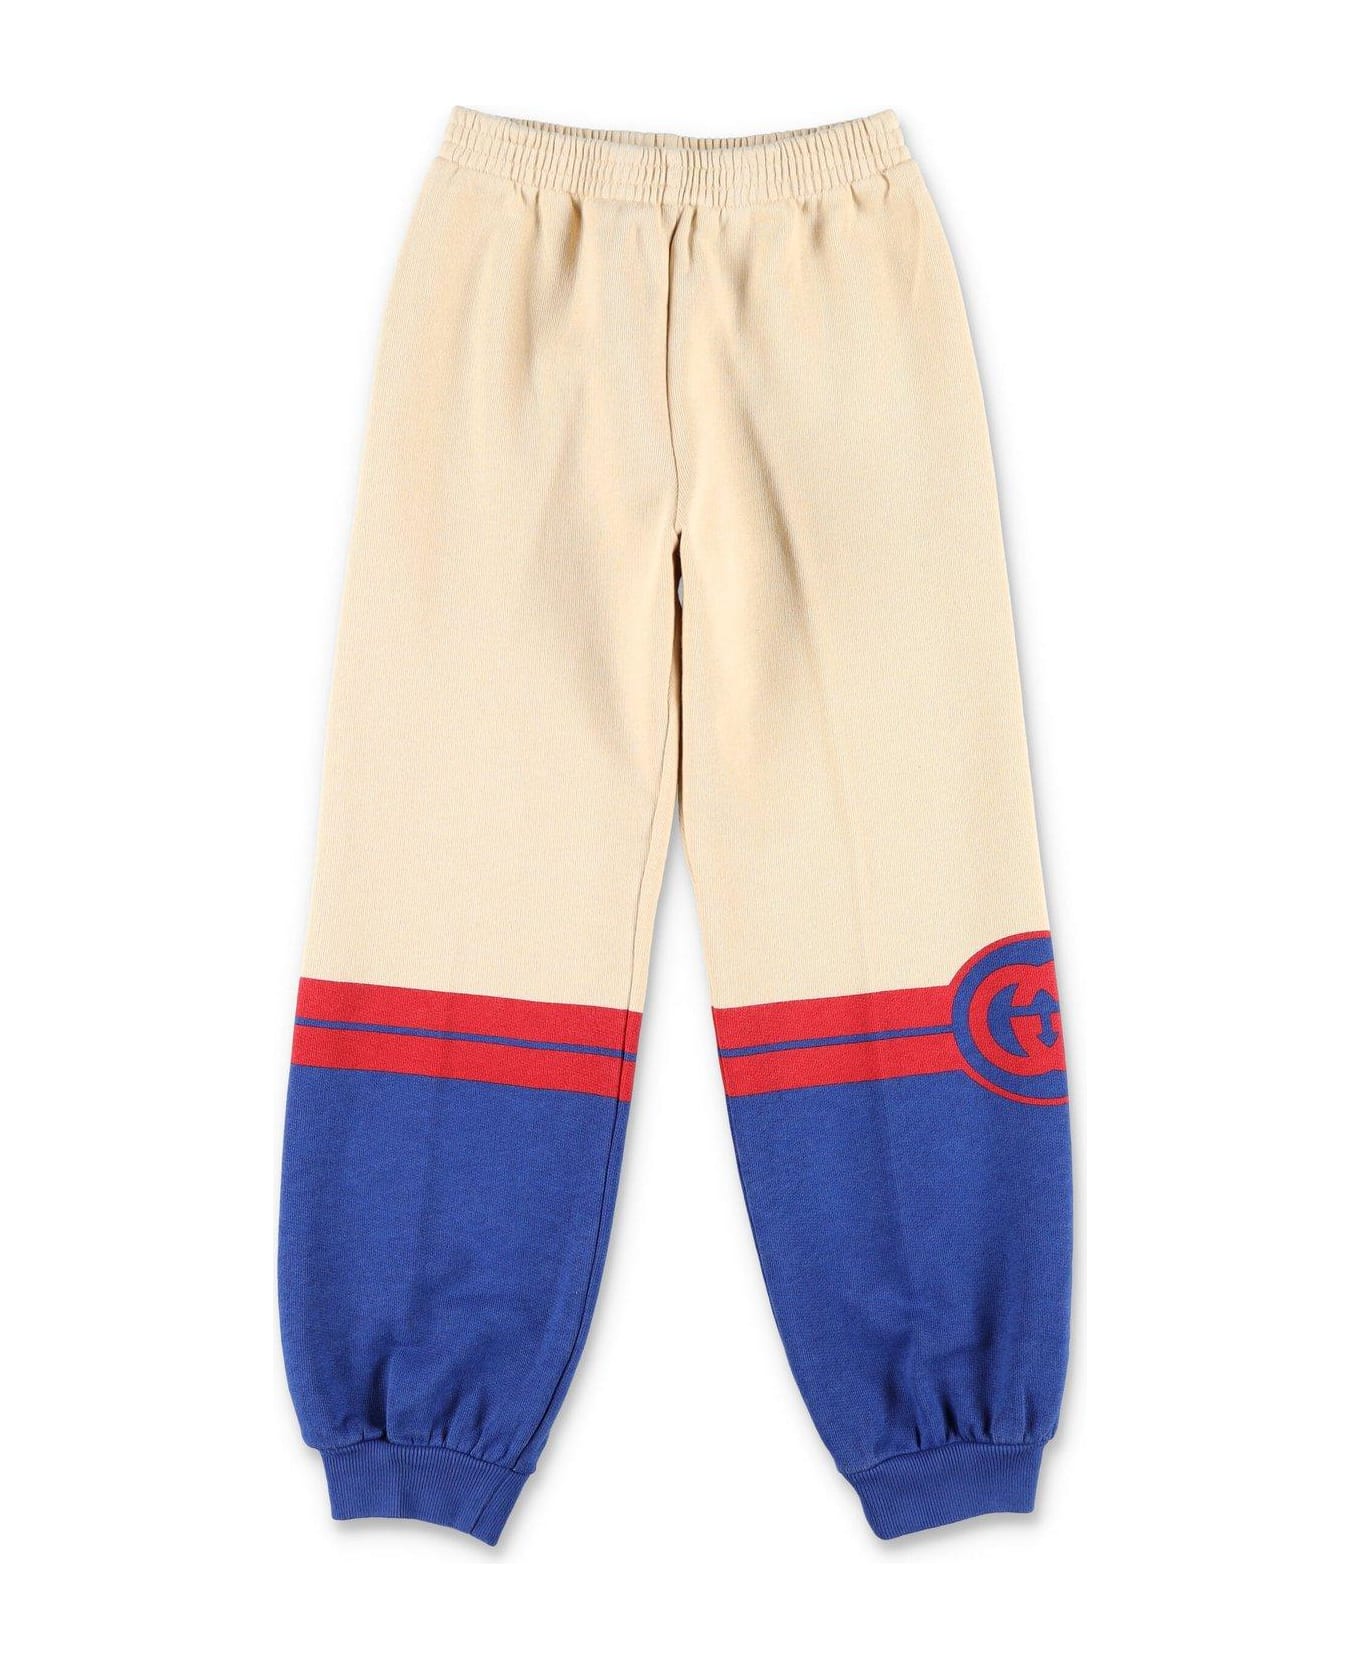 Gucci Interlocking G Printed Jersey Track Pants - Crema